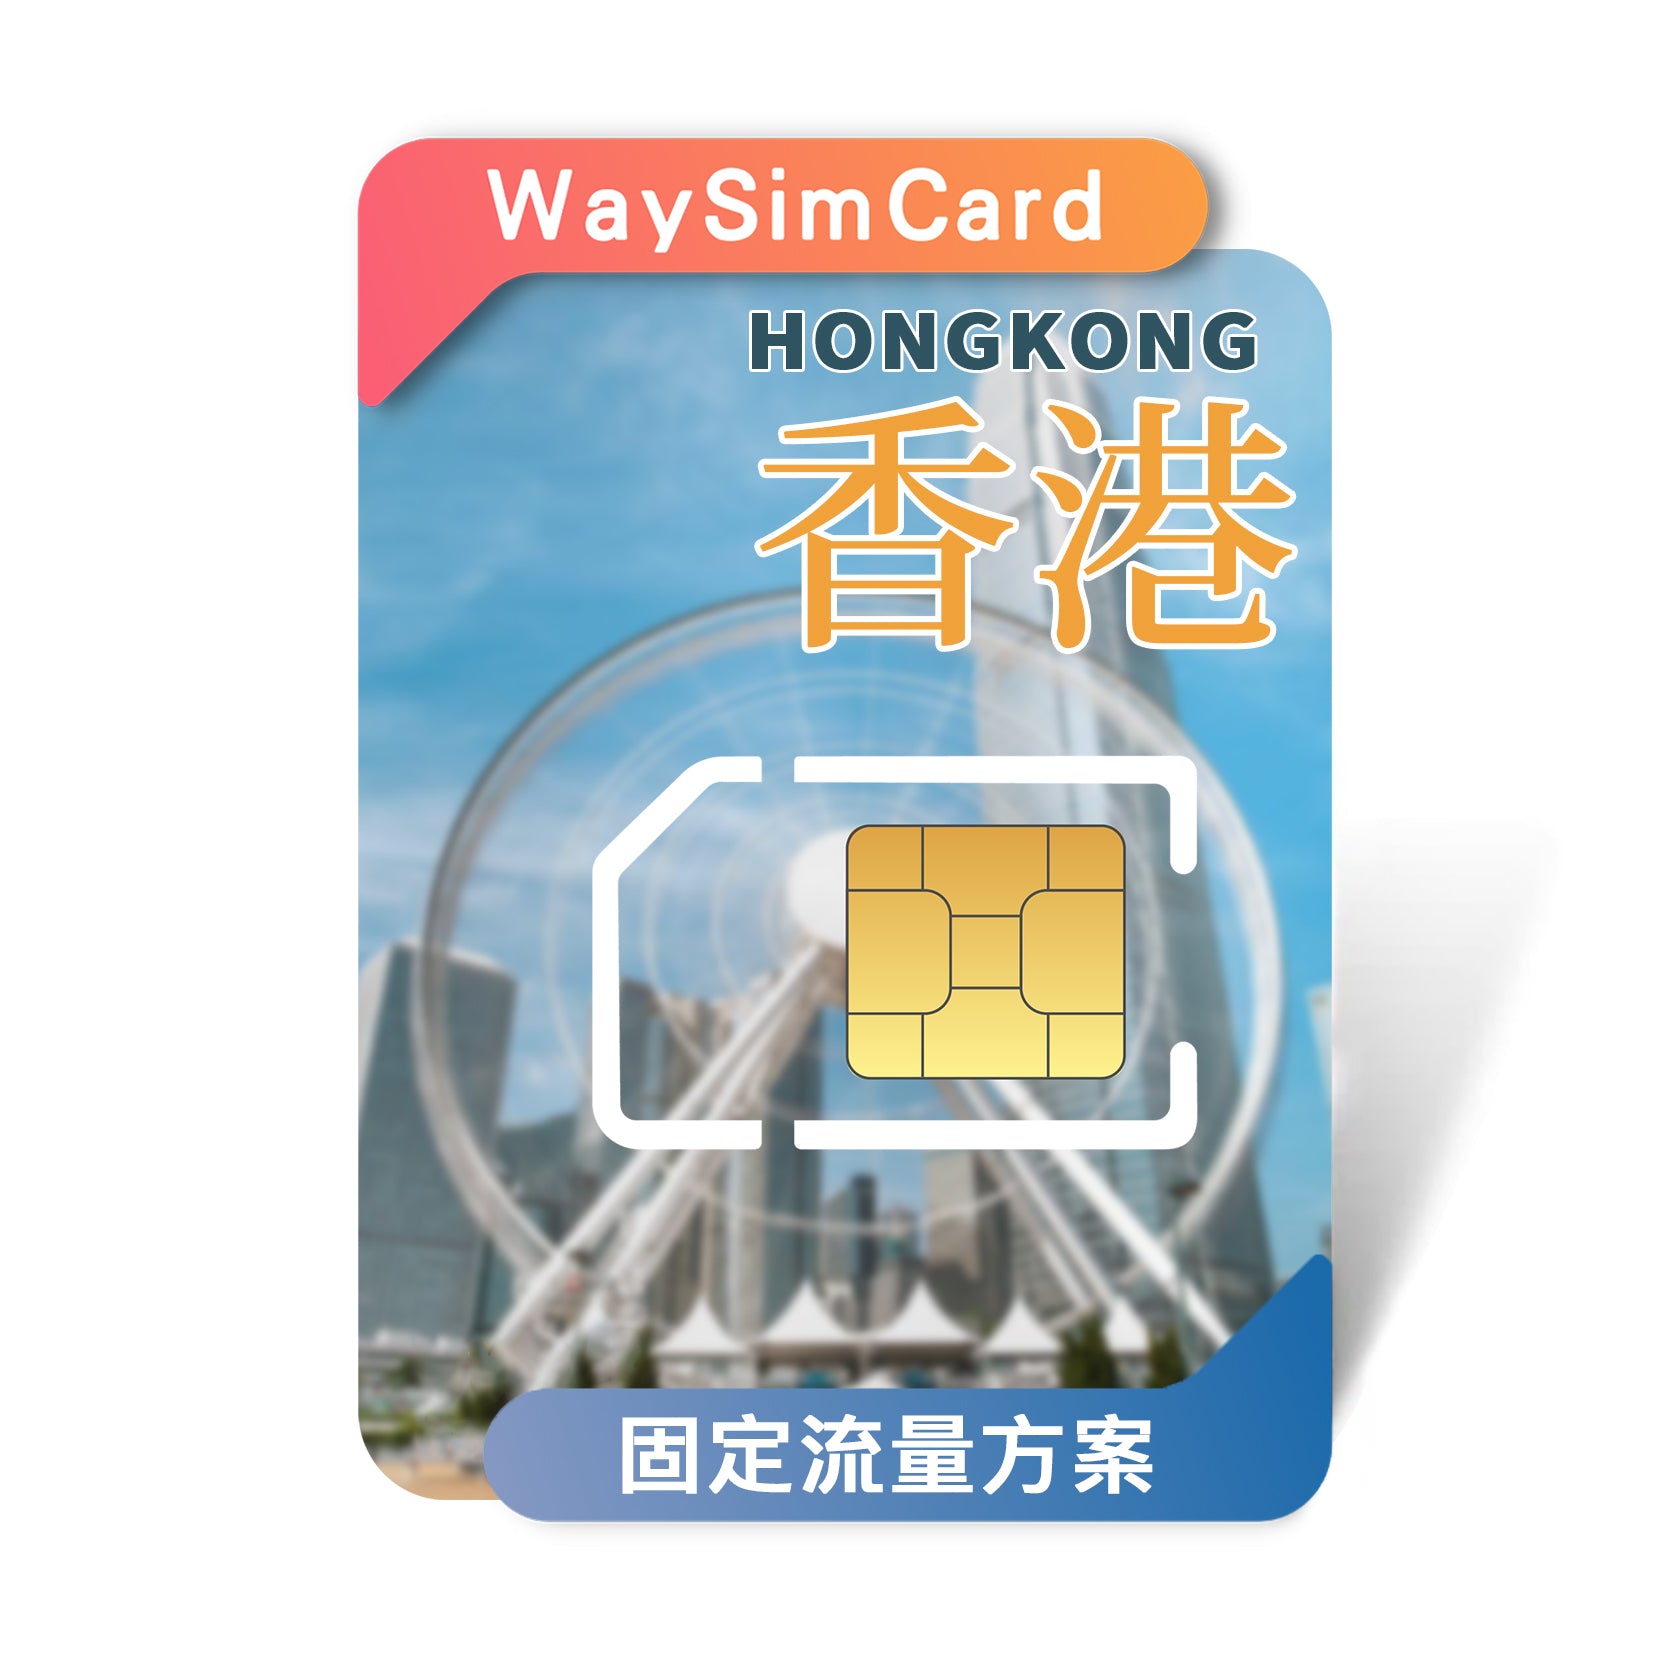 Hong Kong and Macau internet card│4G high-speed fixed traffic│15, 30 days